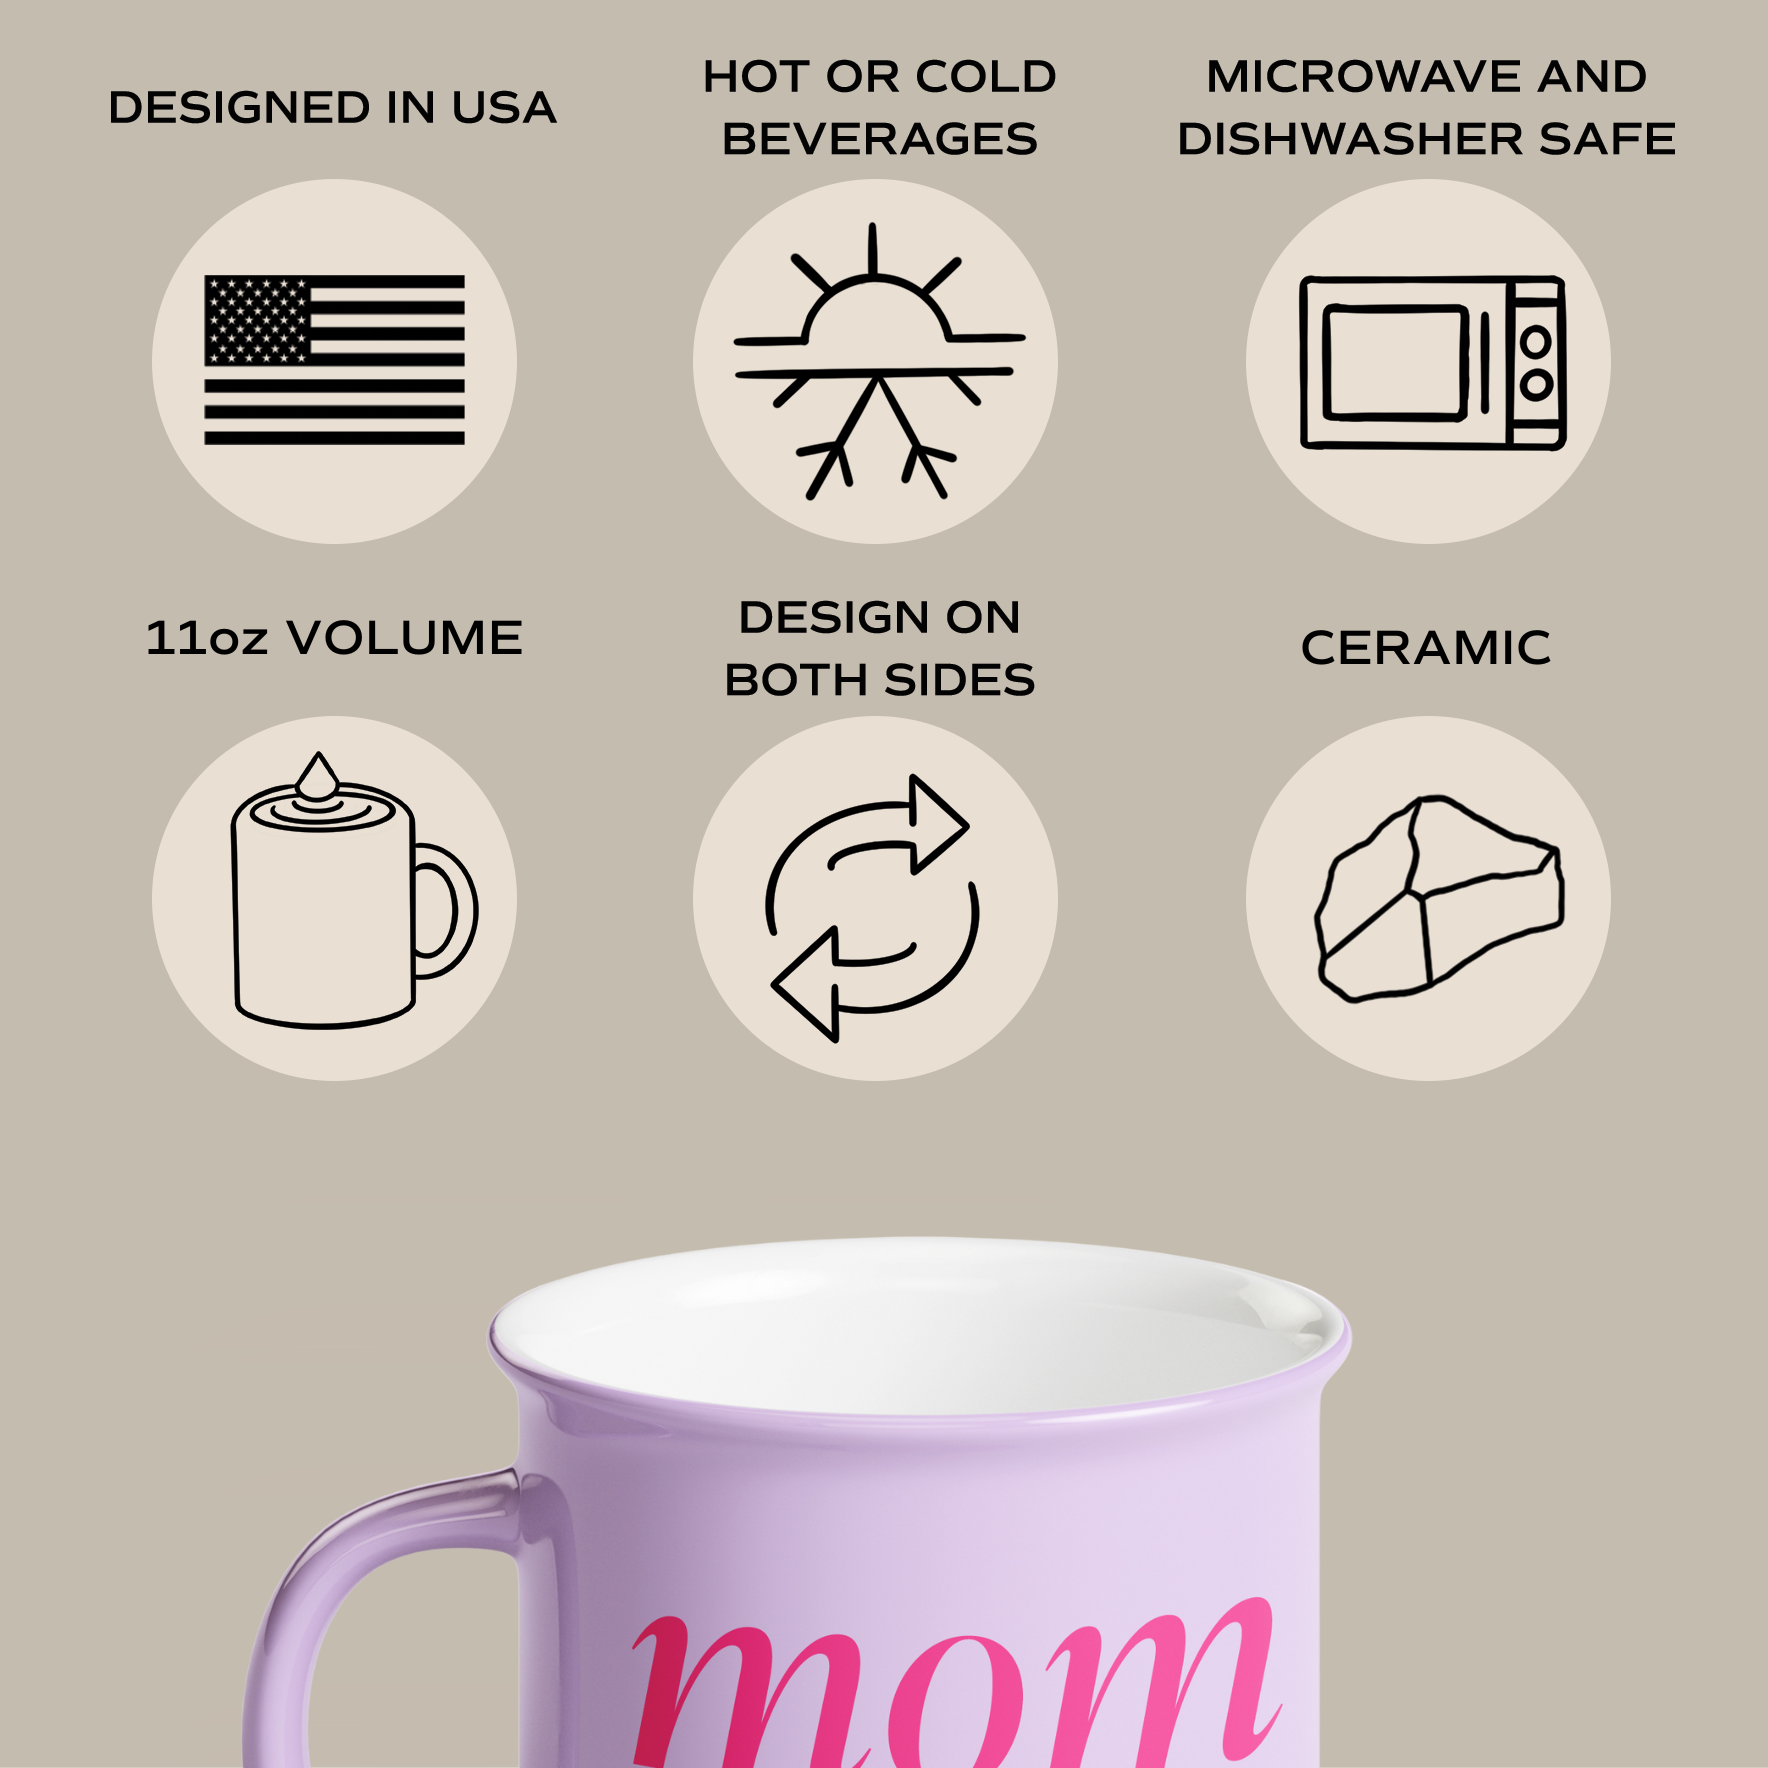 Mom Life 11 Oz Mug